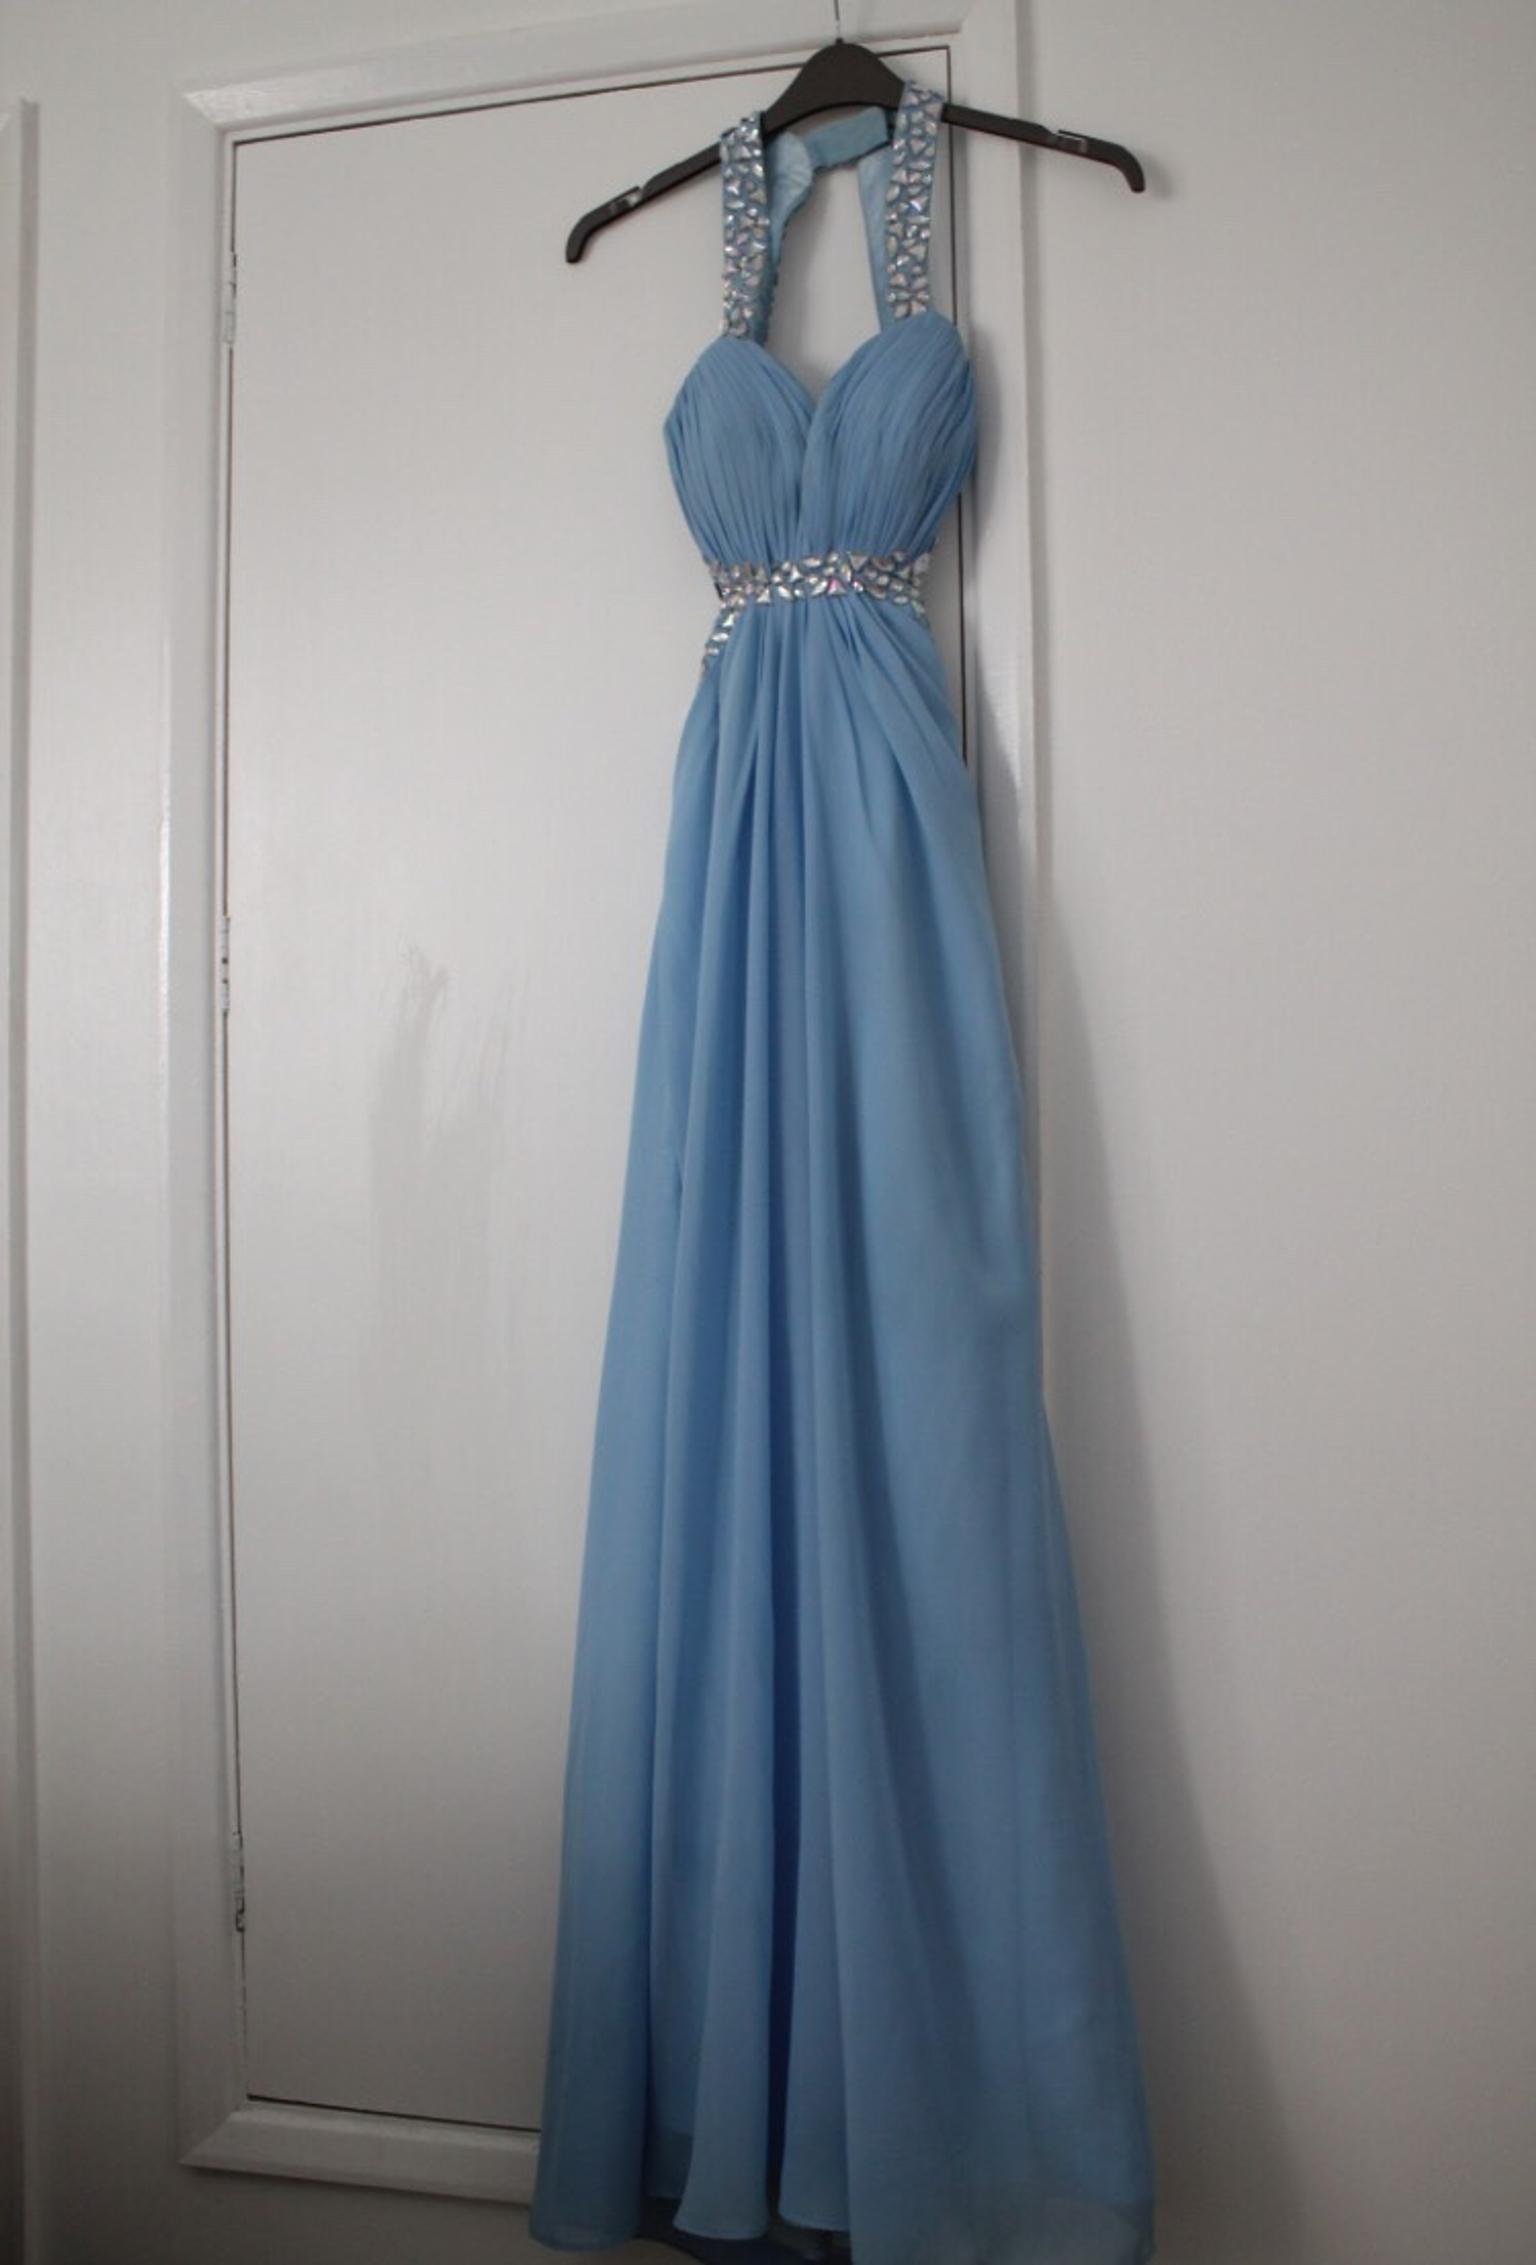 pale blue prom dresses uk